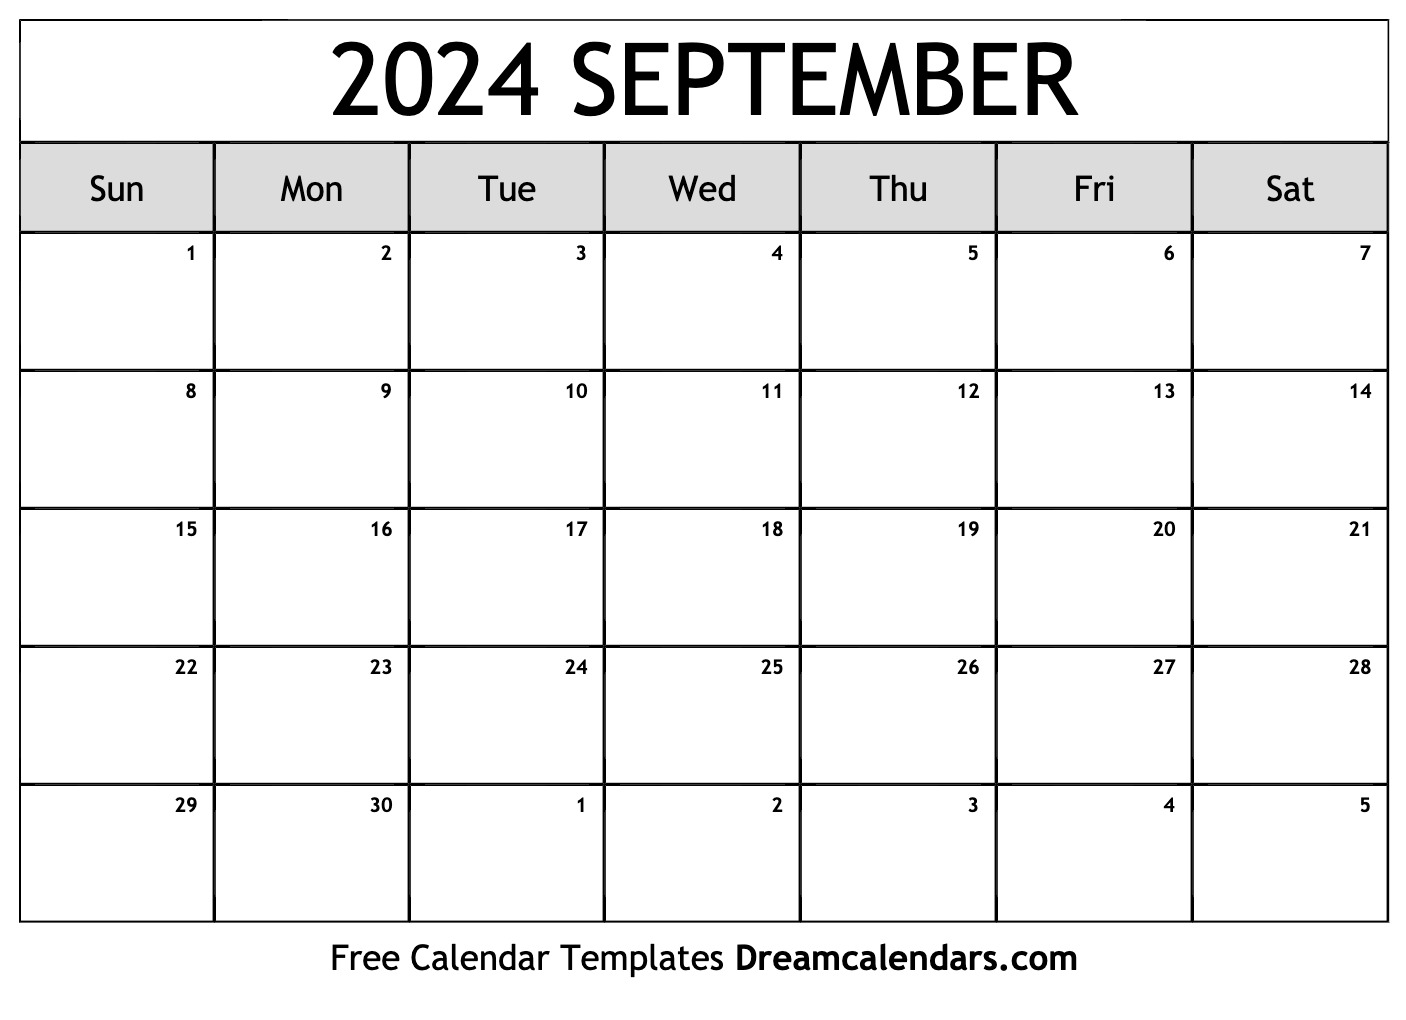 Free 2024 September Calendar Drusi Gisella